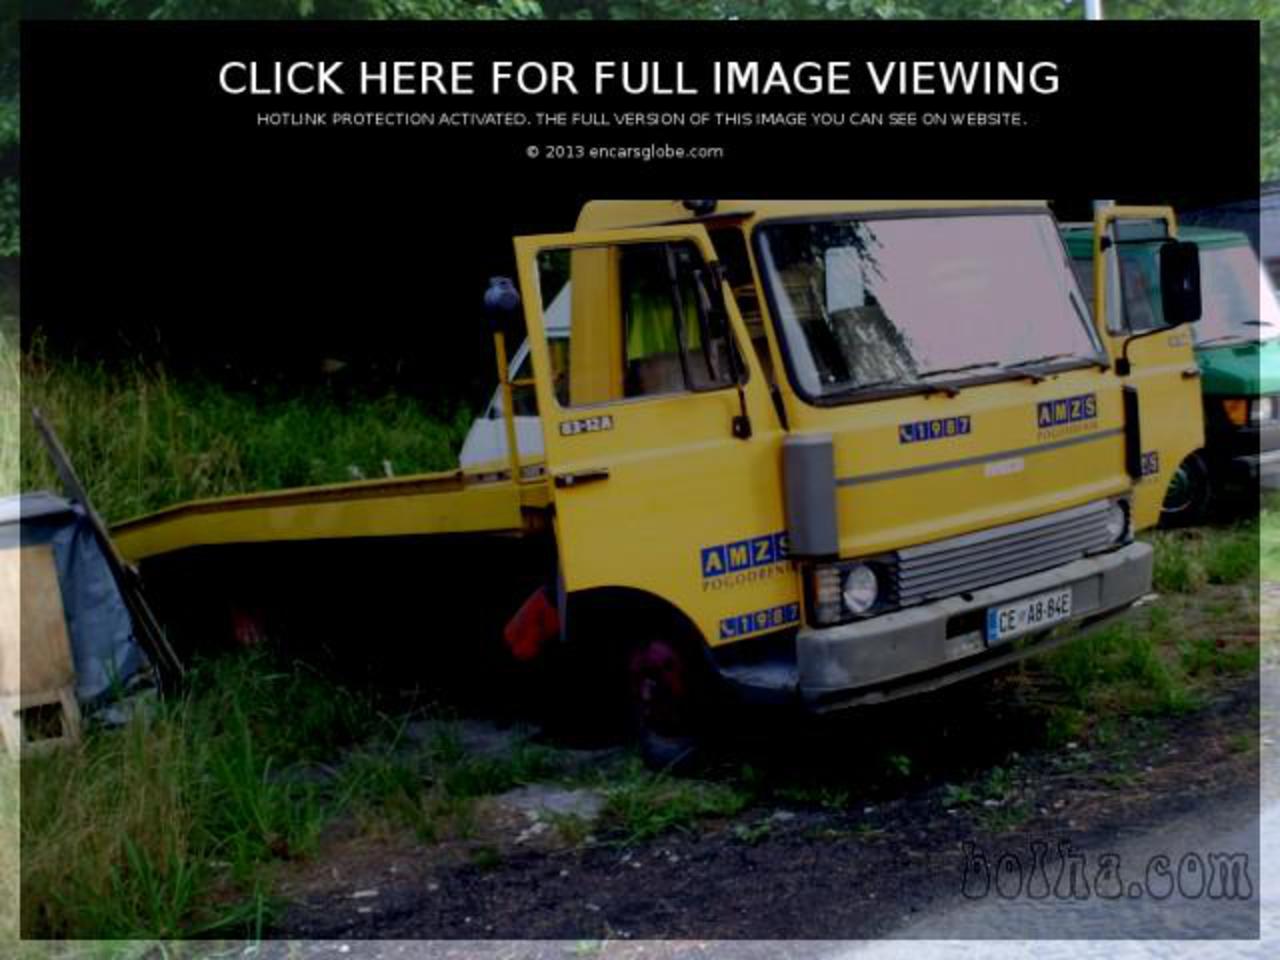 Zastava-Iveco Turbo-Zeta 80-12A Photo Gallery: Photo #08 out of 11 ...